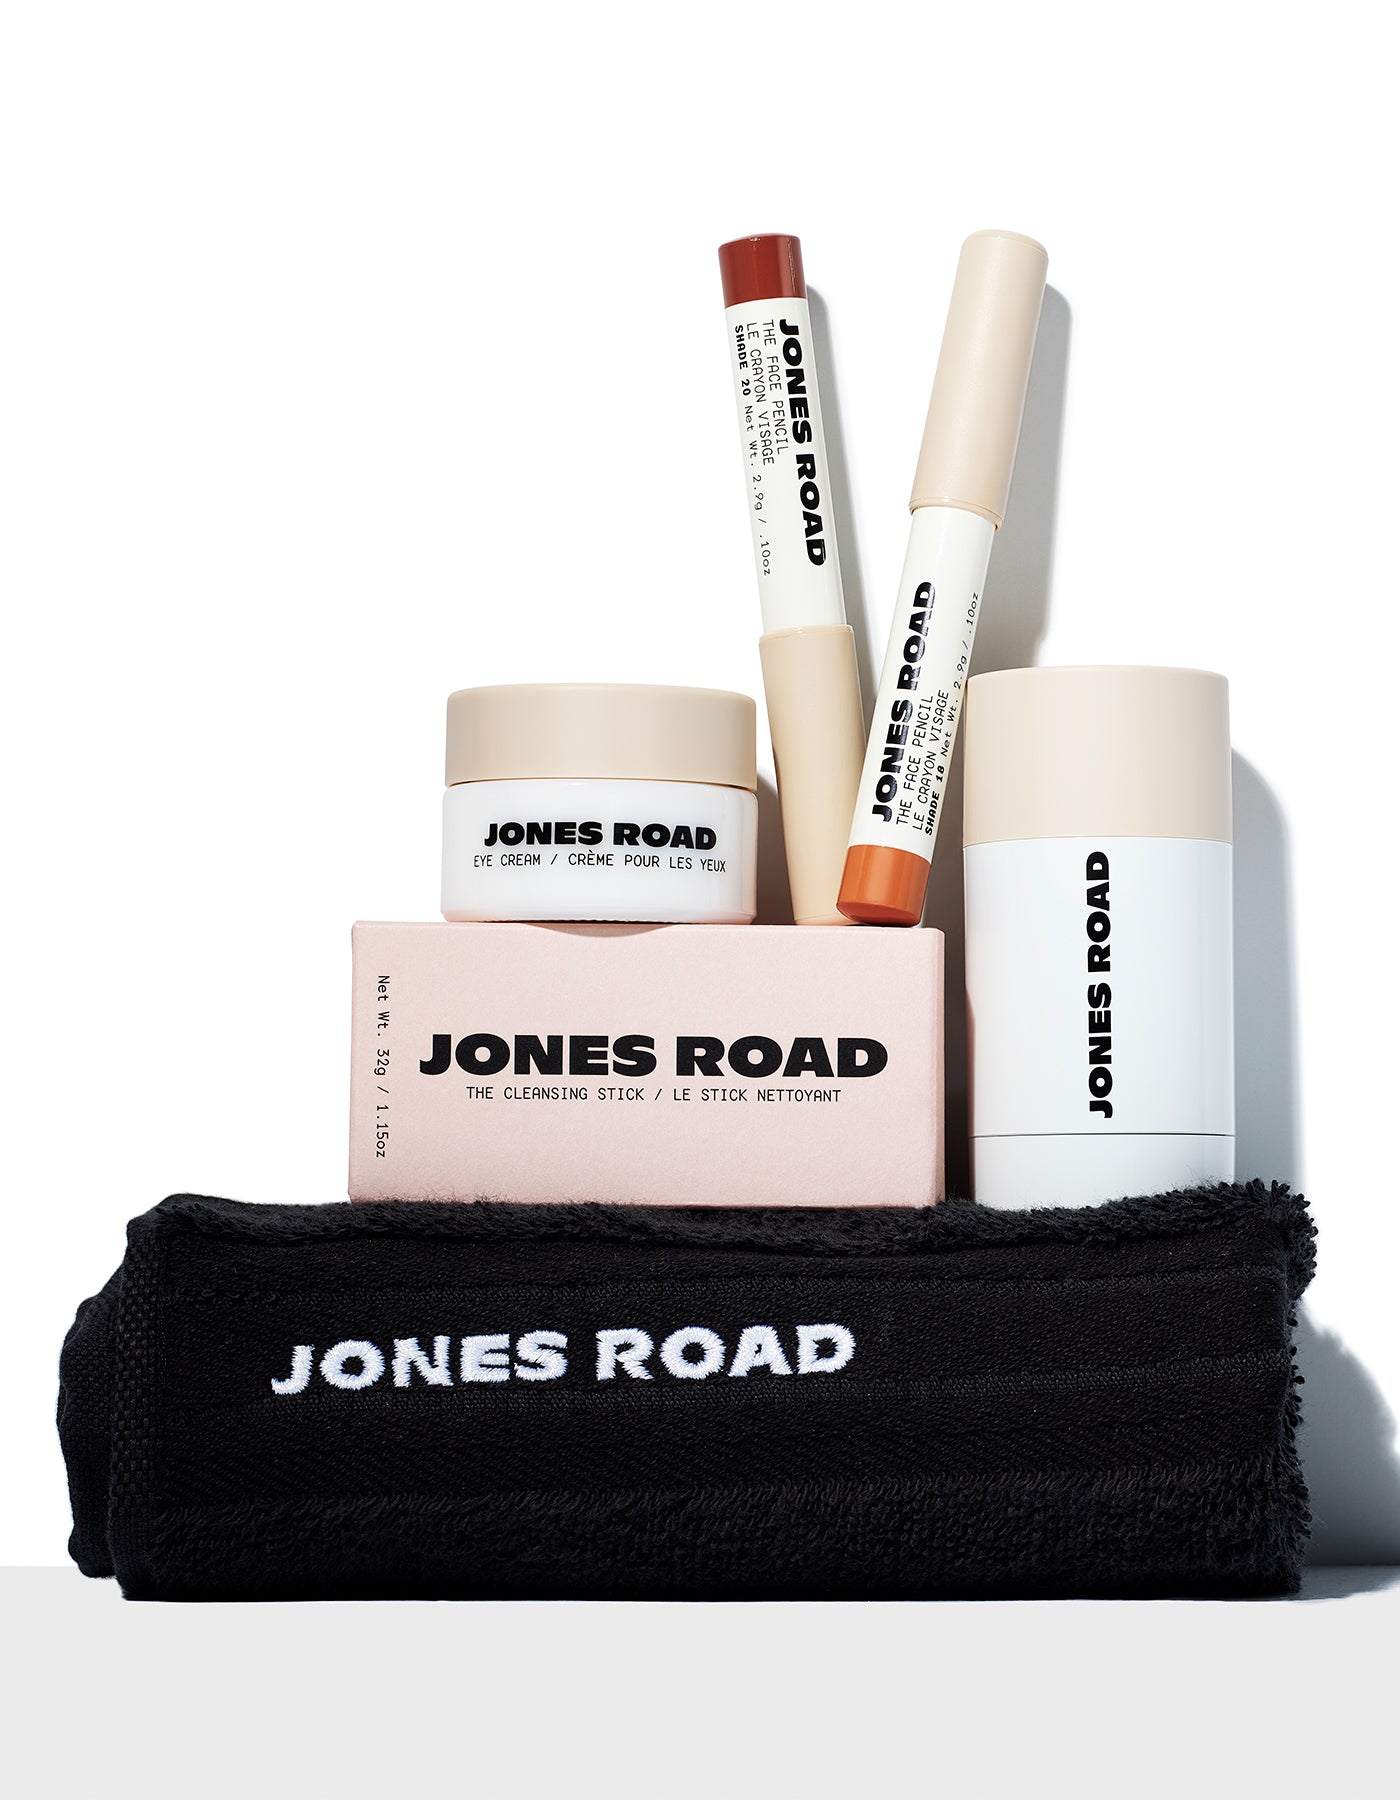 Jones Road Beauty products